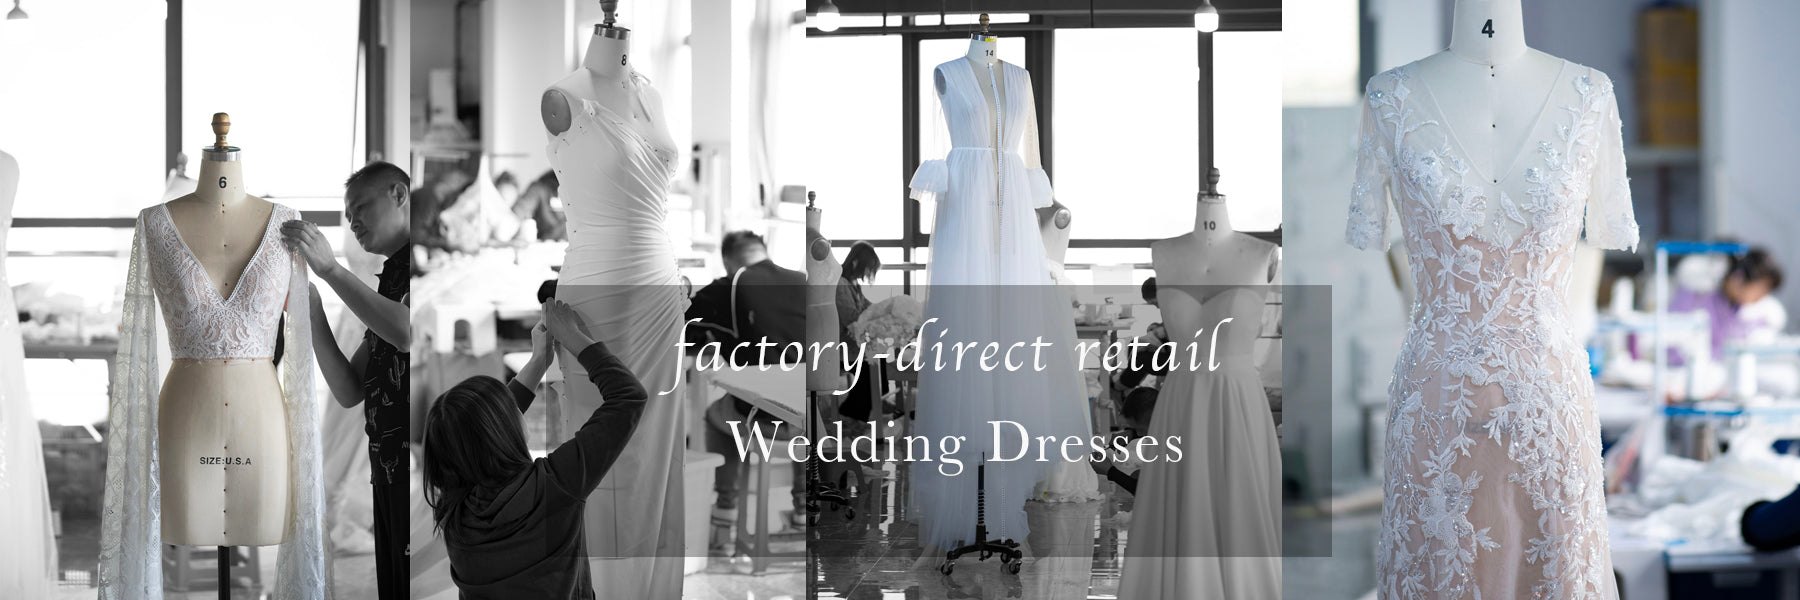 factory-direct retail wedding dresses